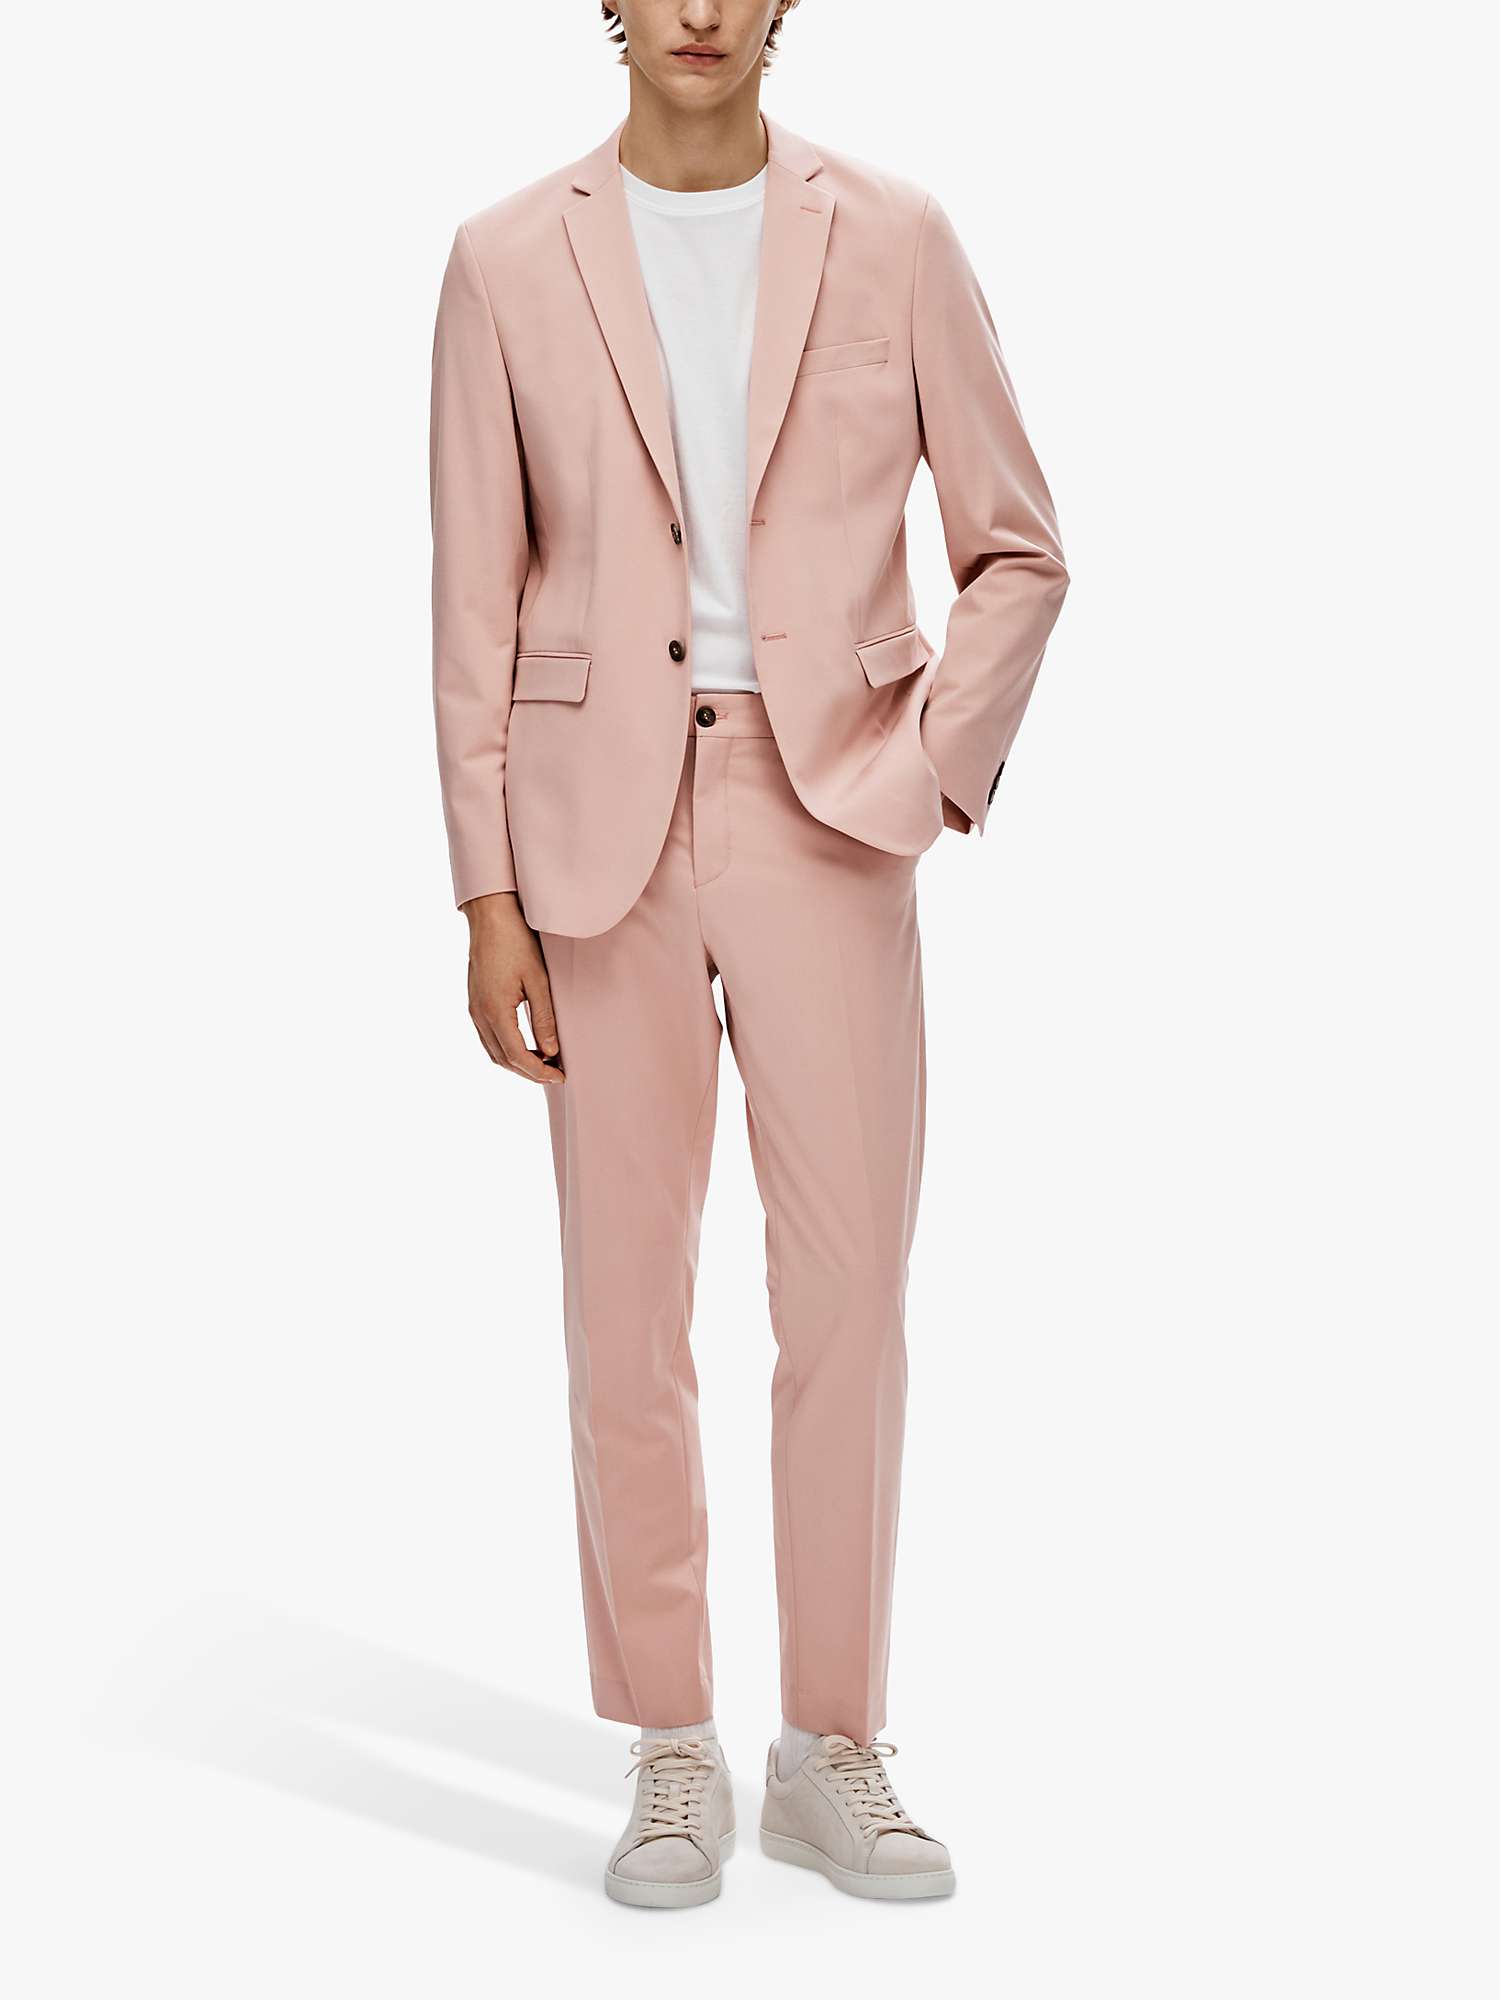 Buy SELECTED HOMME Slim Fit Suit Jacket, Pink Online at johnlewis.com